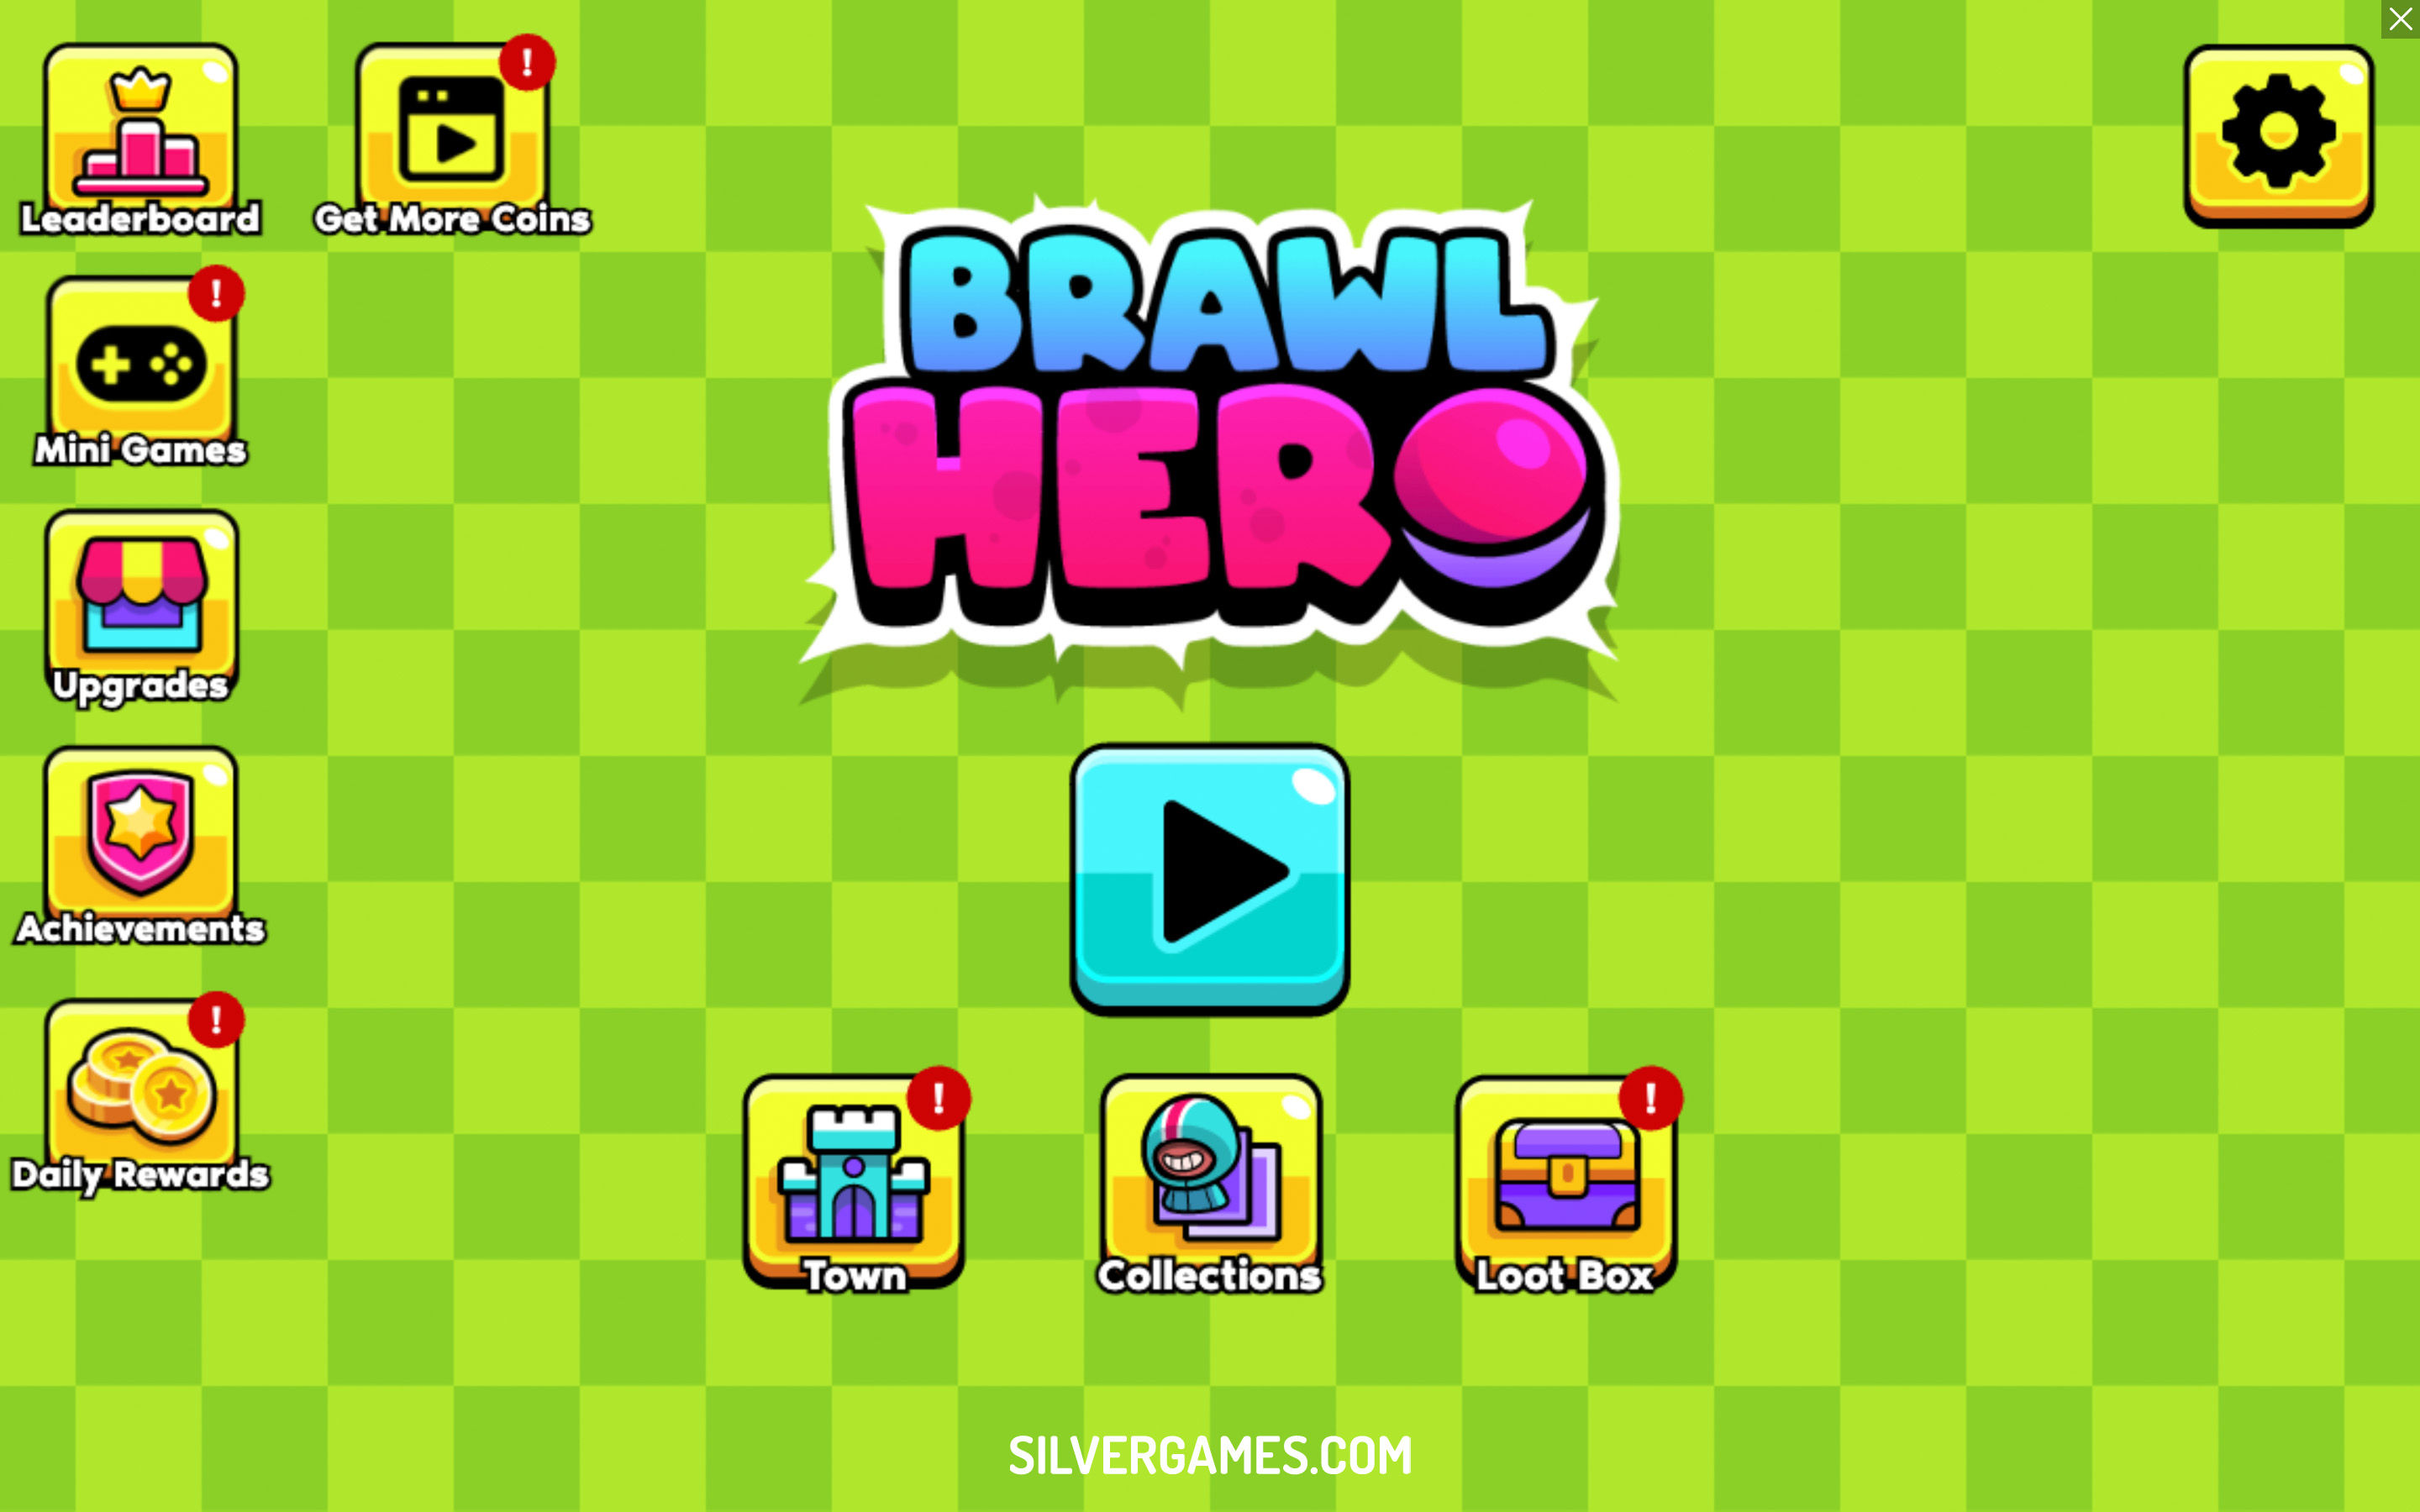 Brawl Hero - Play Brawl Hero Game online at Poki 2